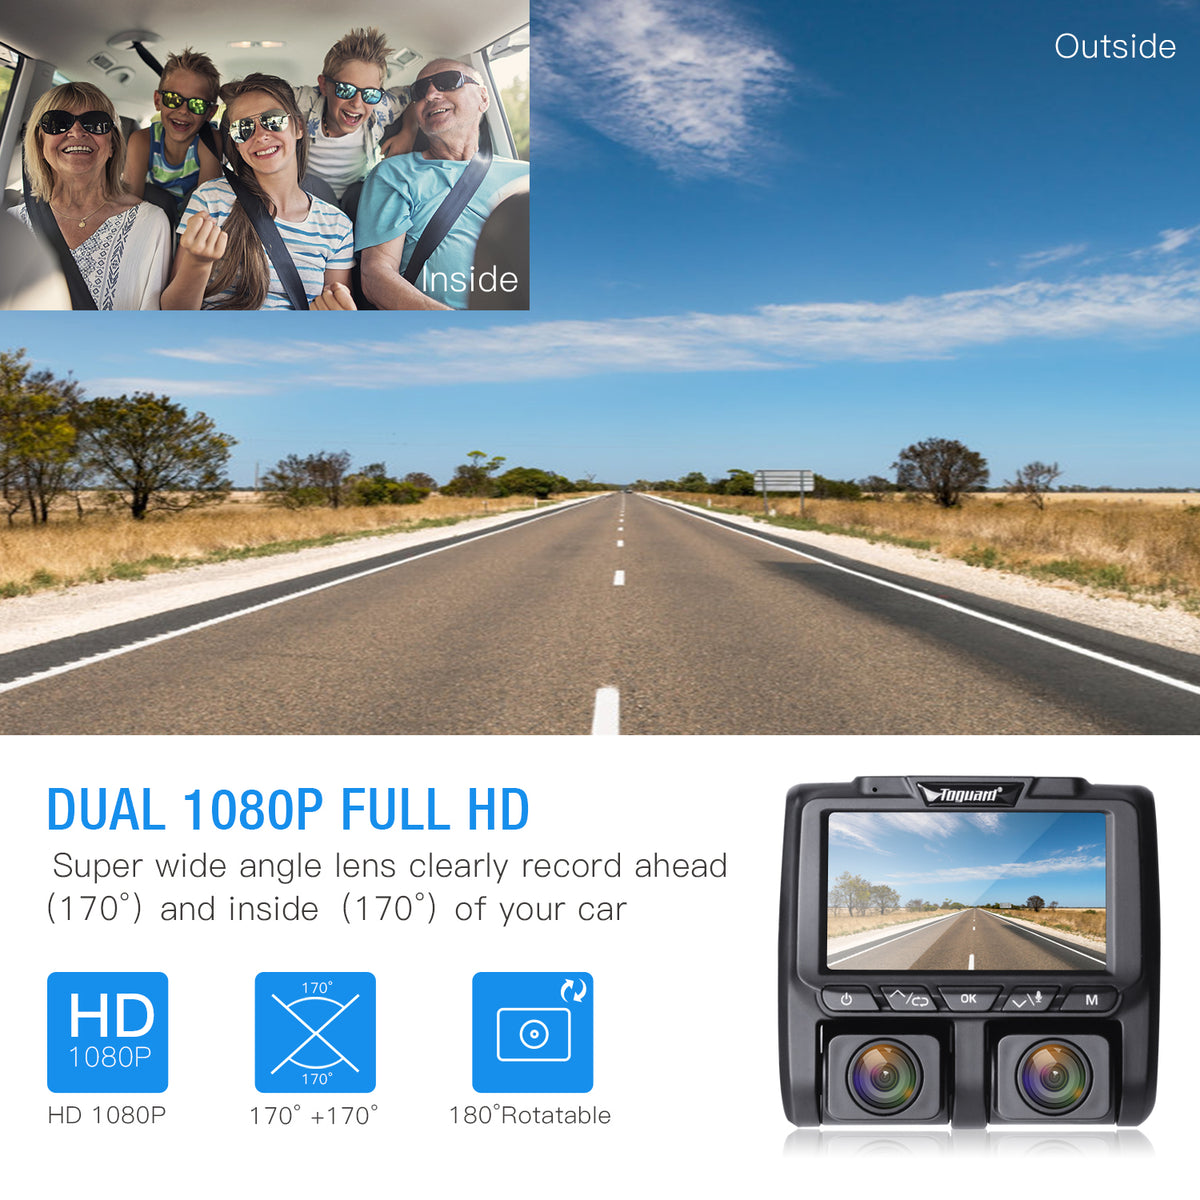 Buy Dash Cam Online, Toguard CE70 Dash Cam